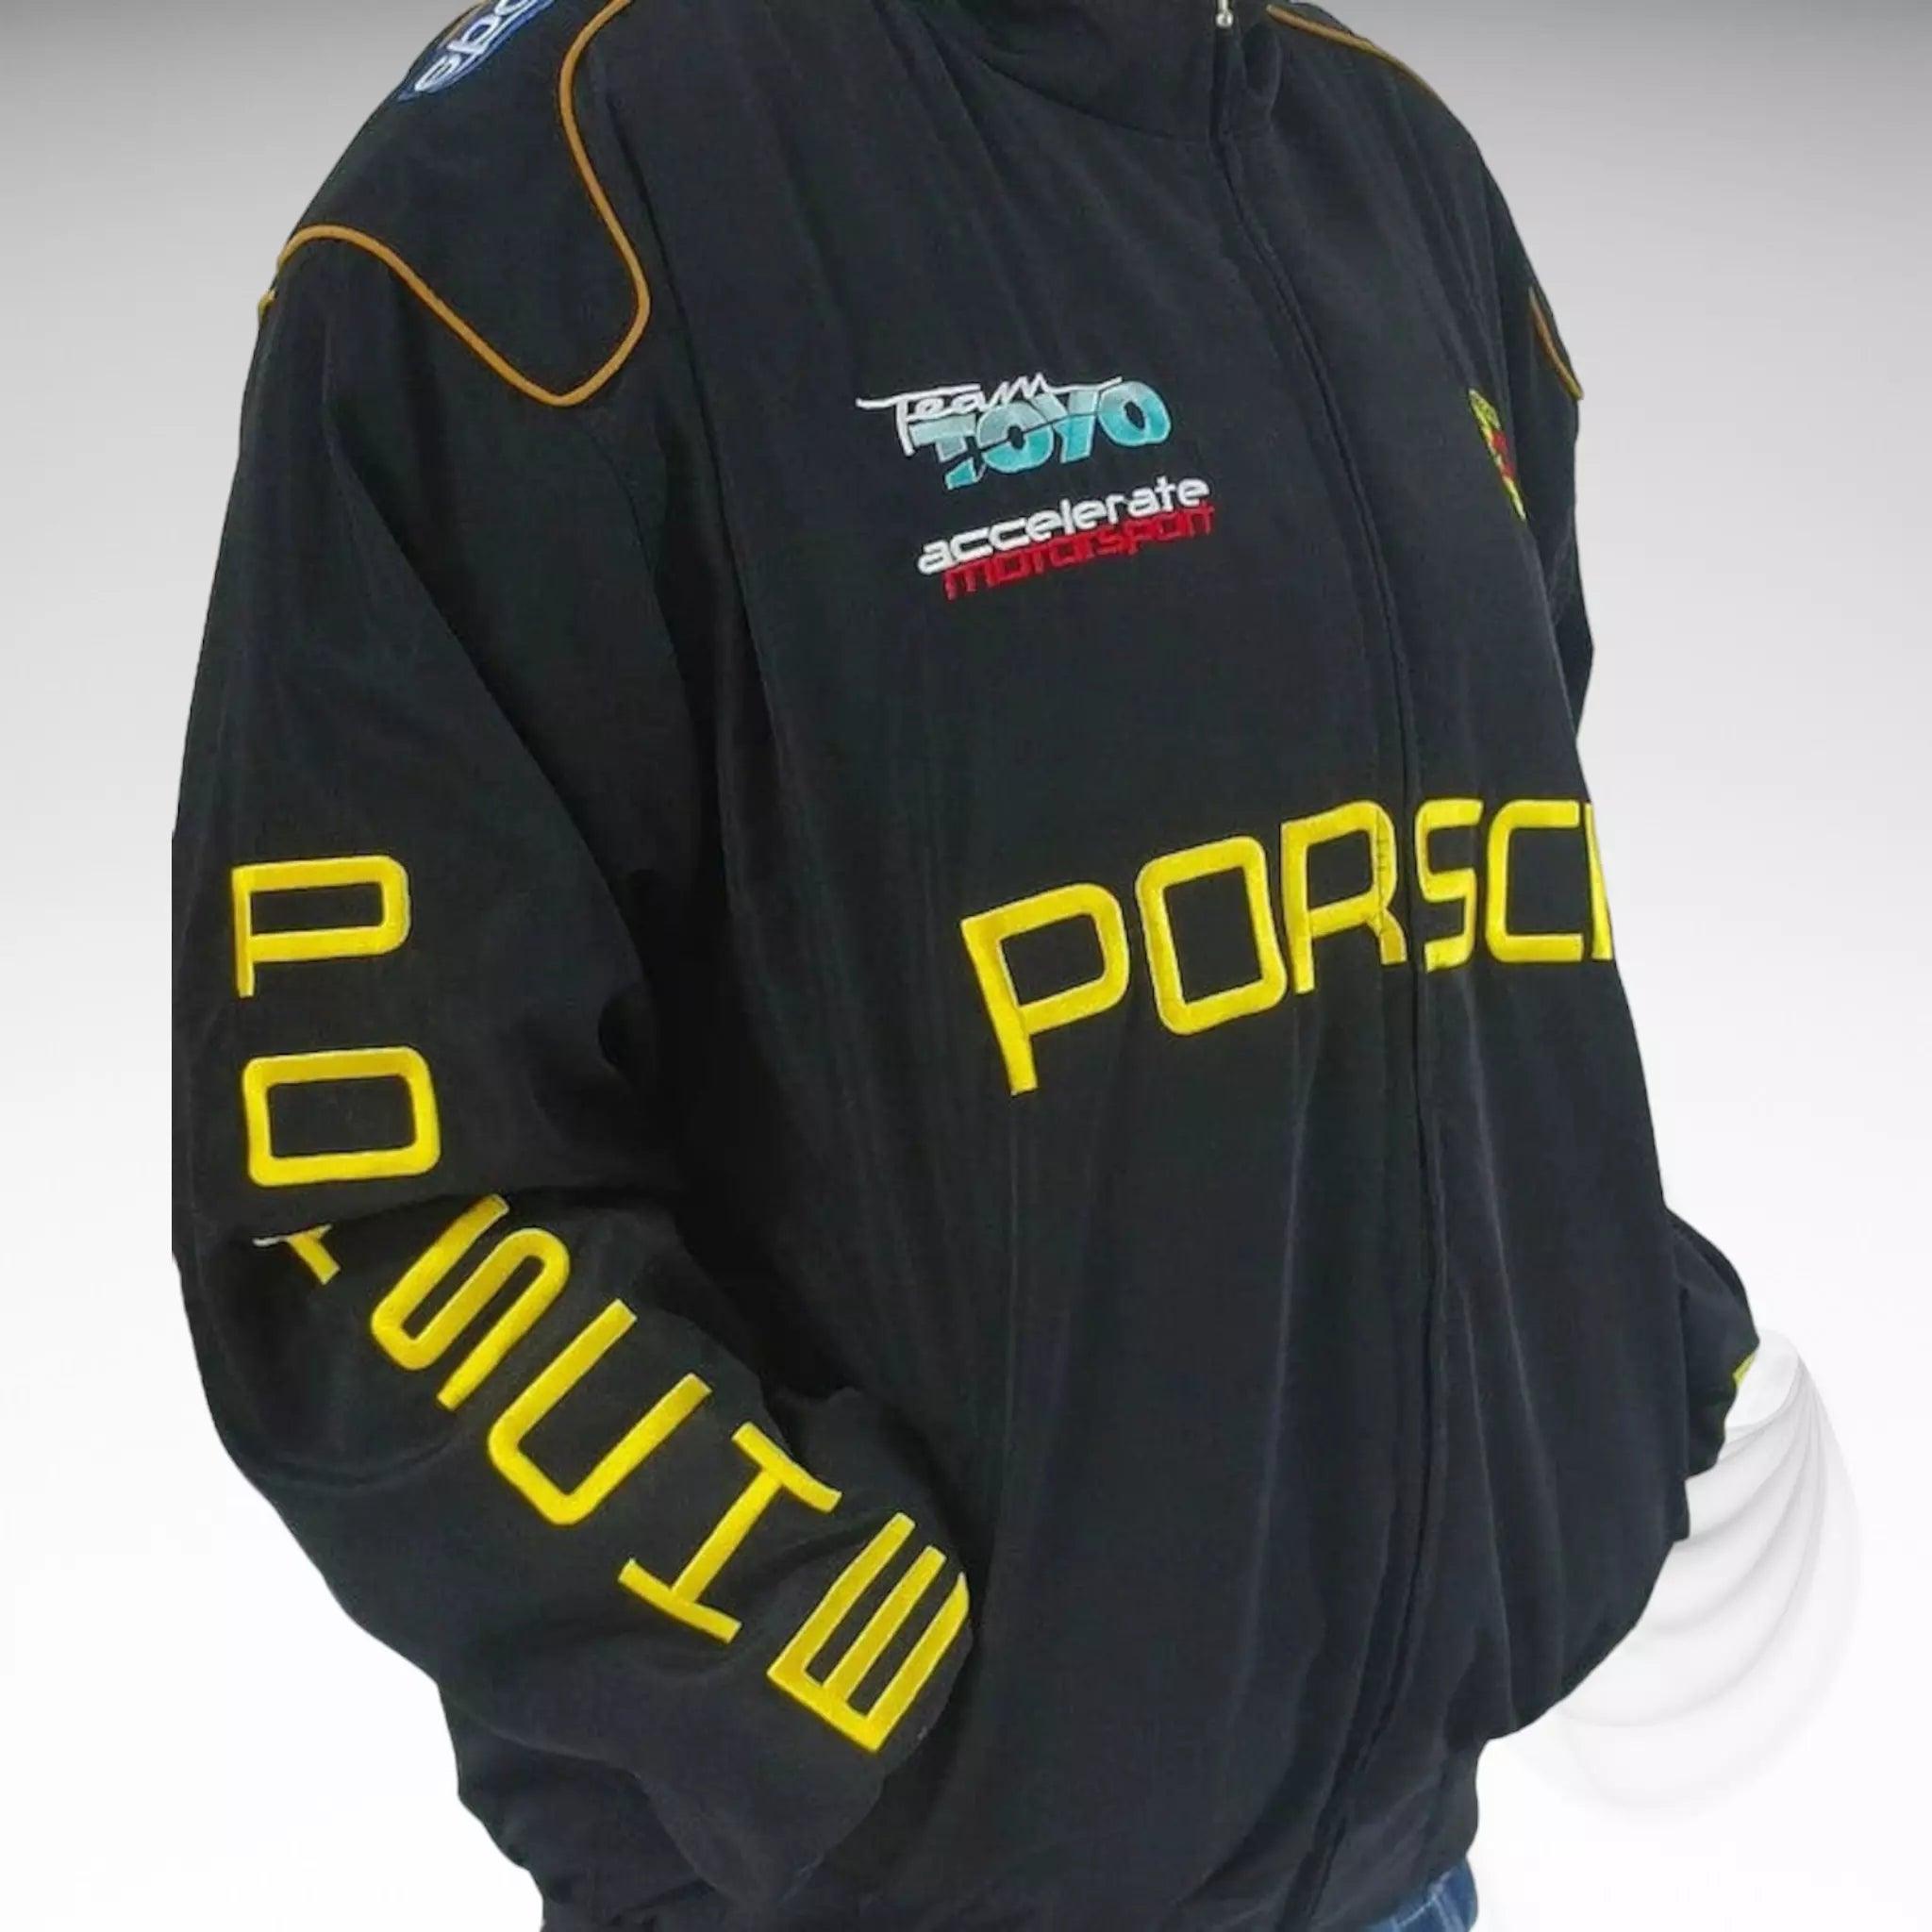 Porsche Embroidered Bomber Jacket Formula 1 Racing - Dash Racegear 